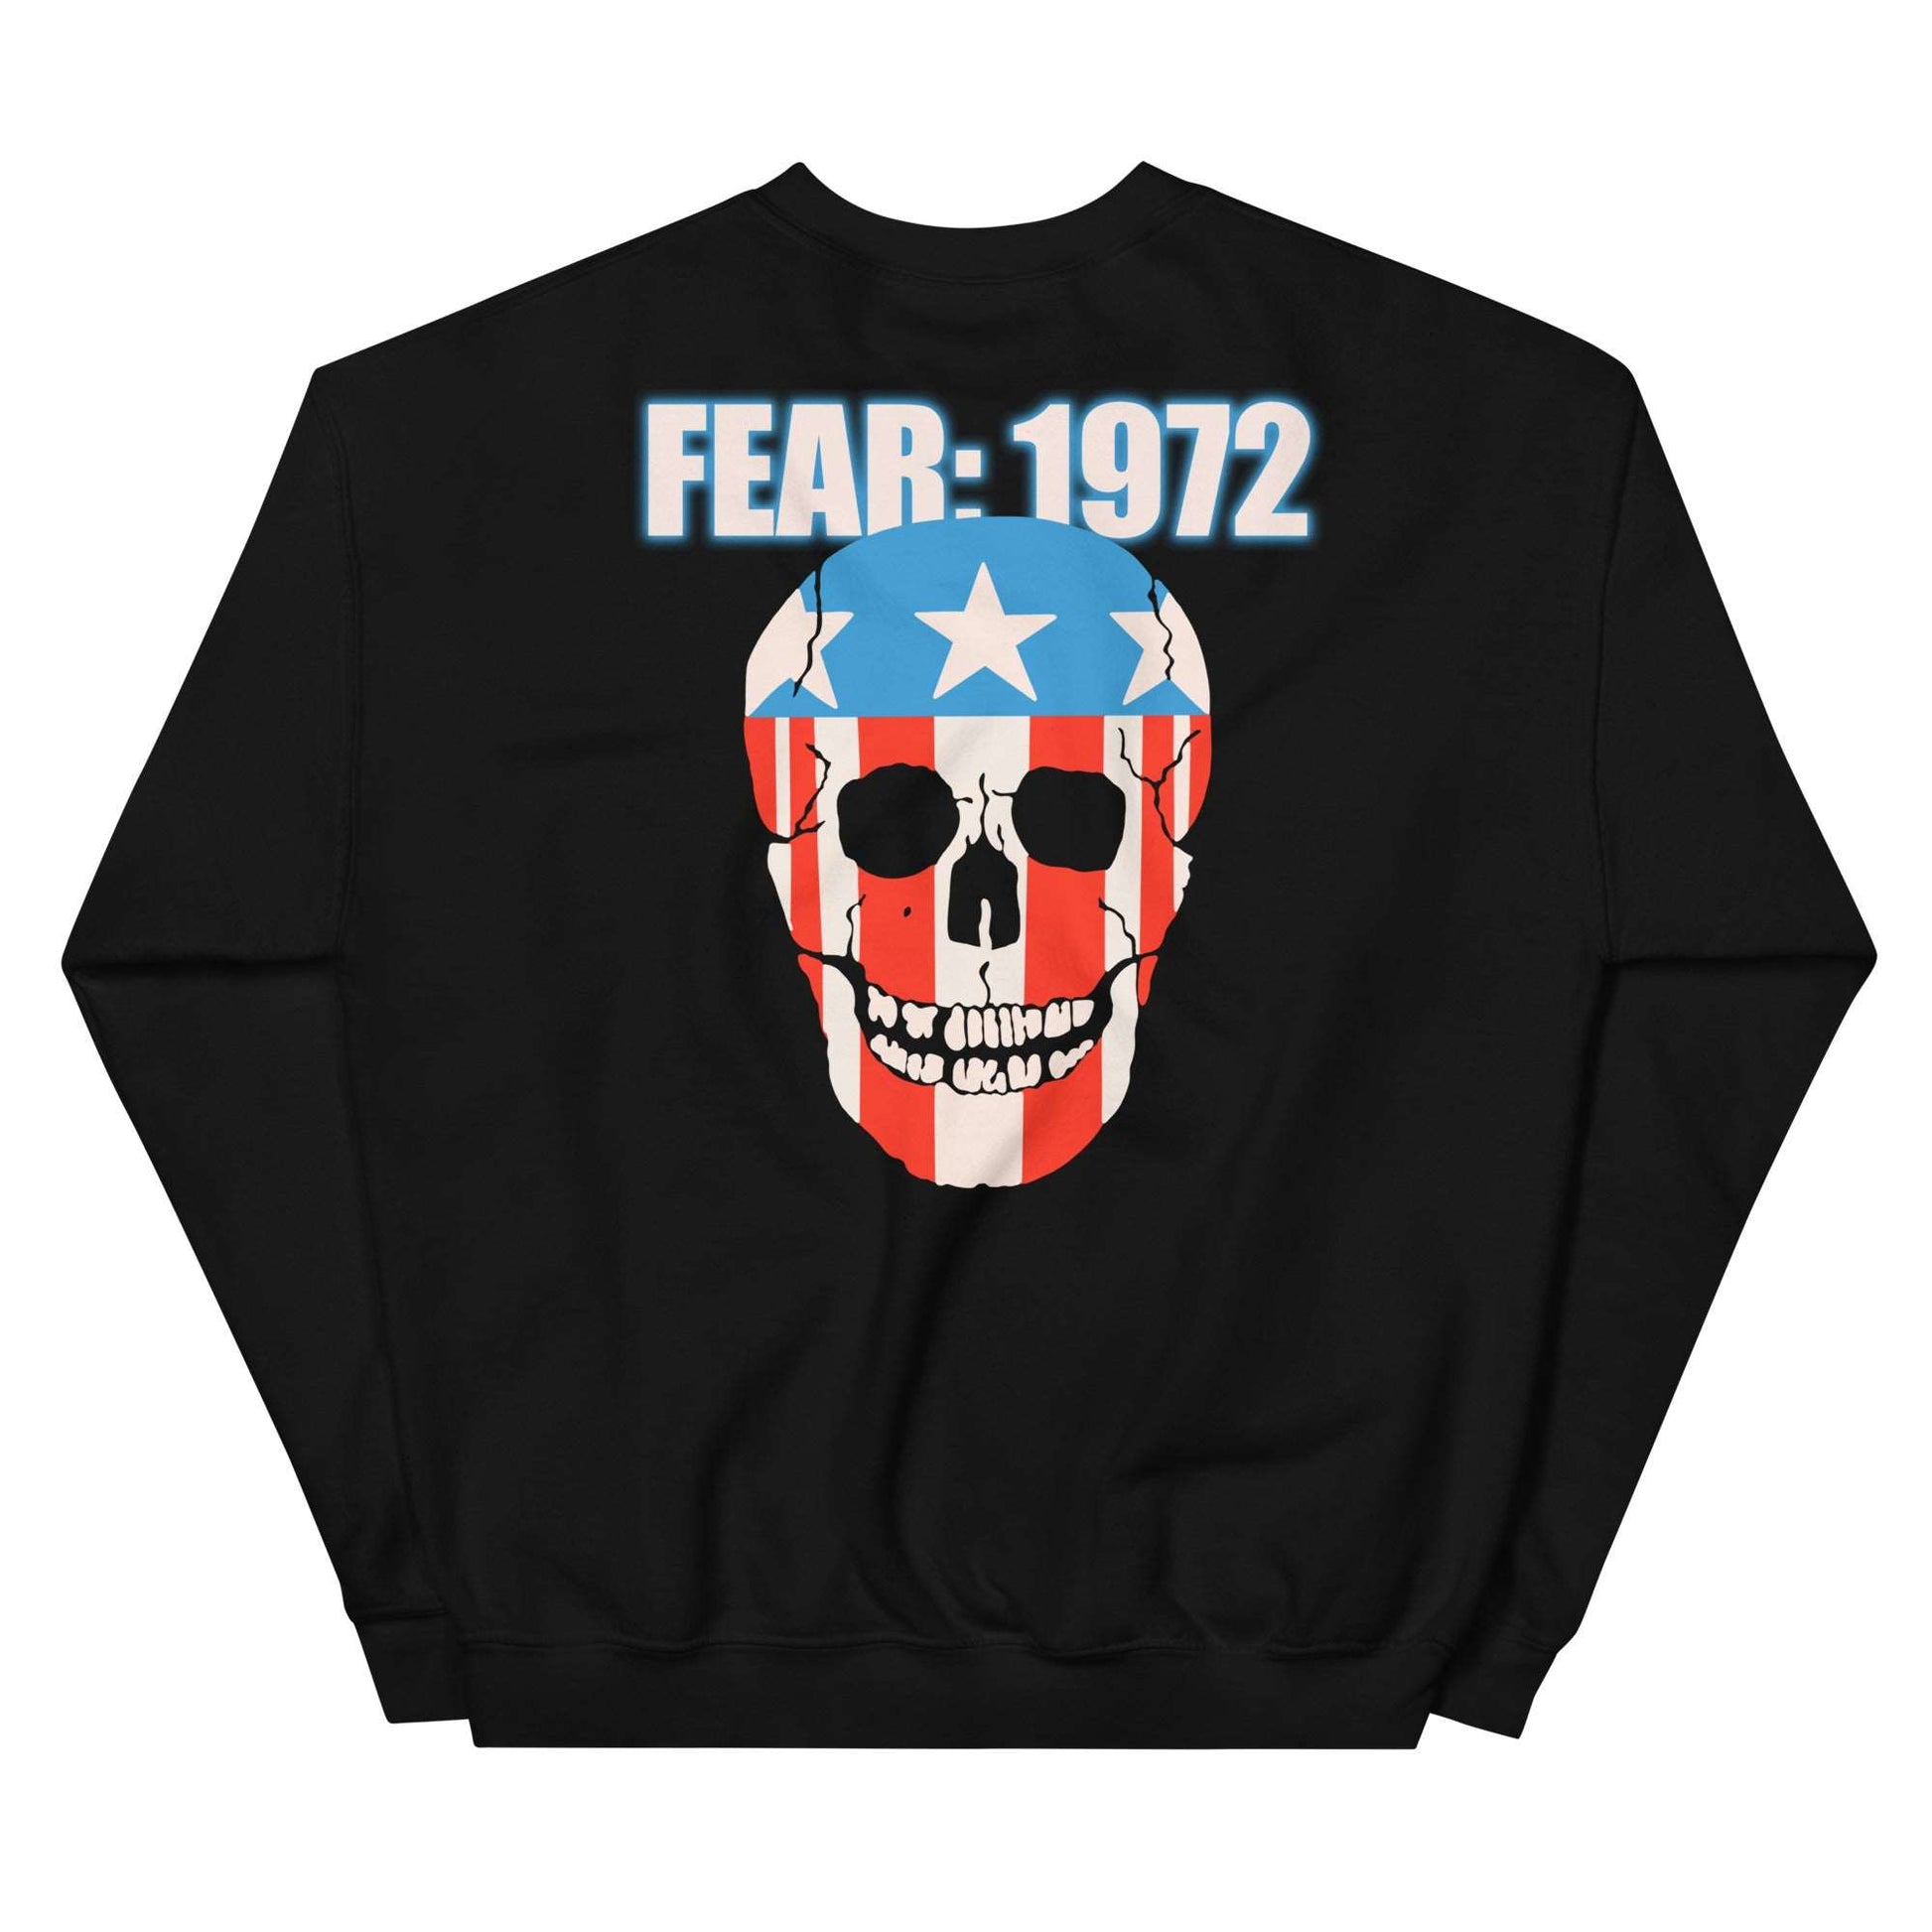 Fear: 1972 Crew Neck